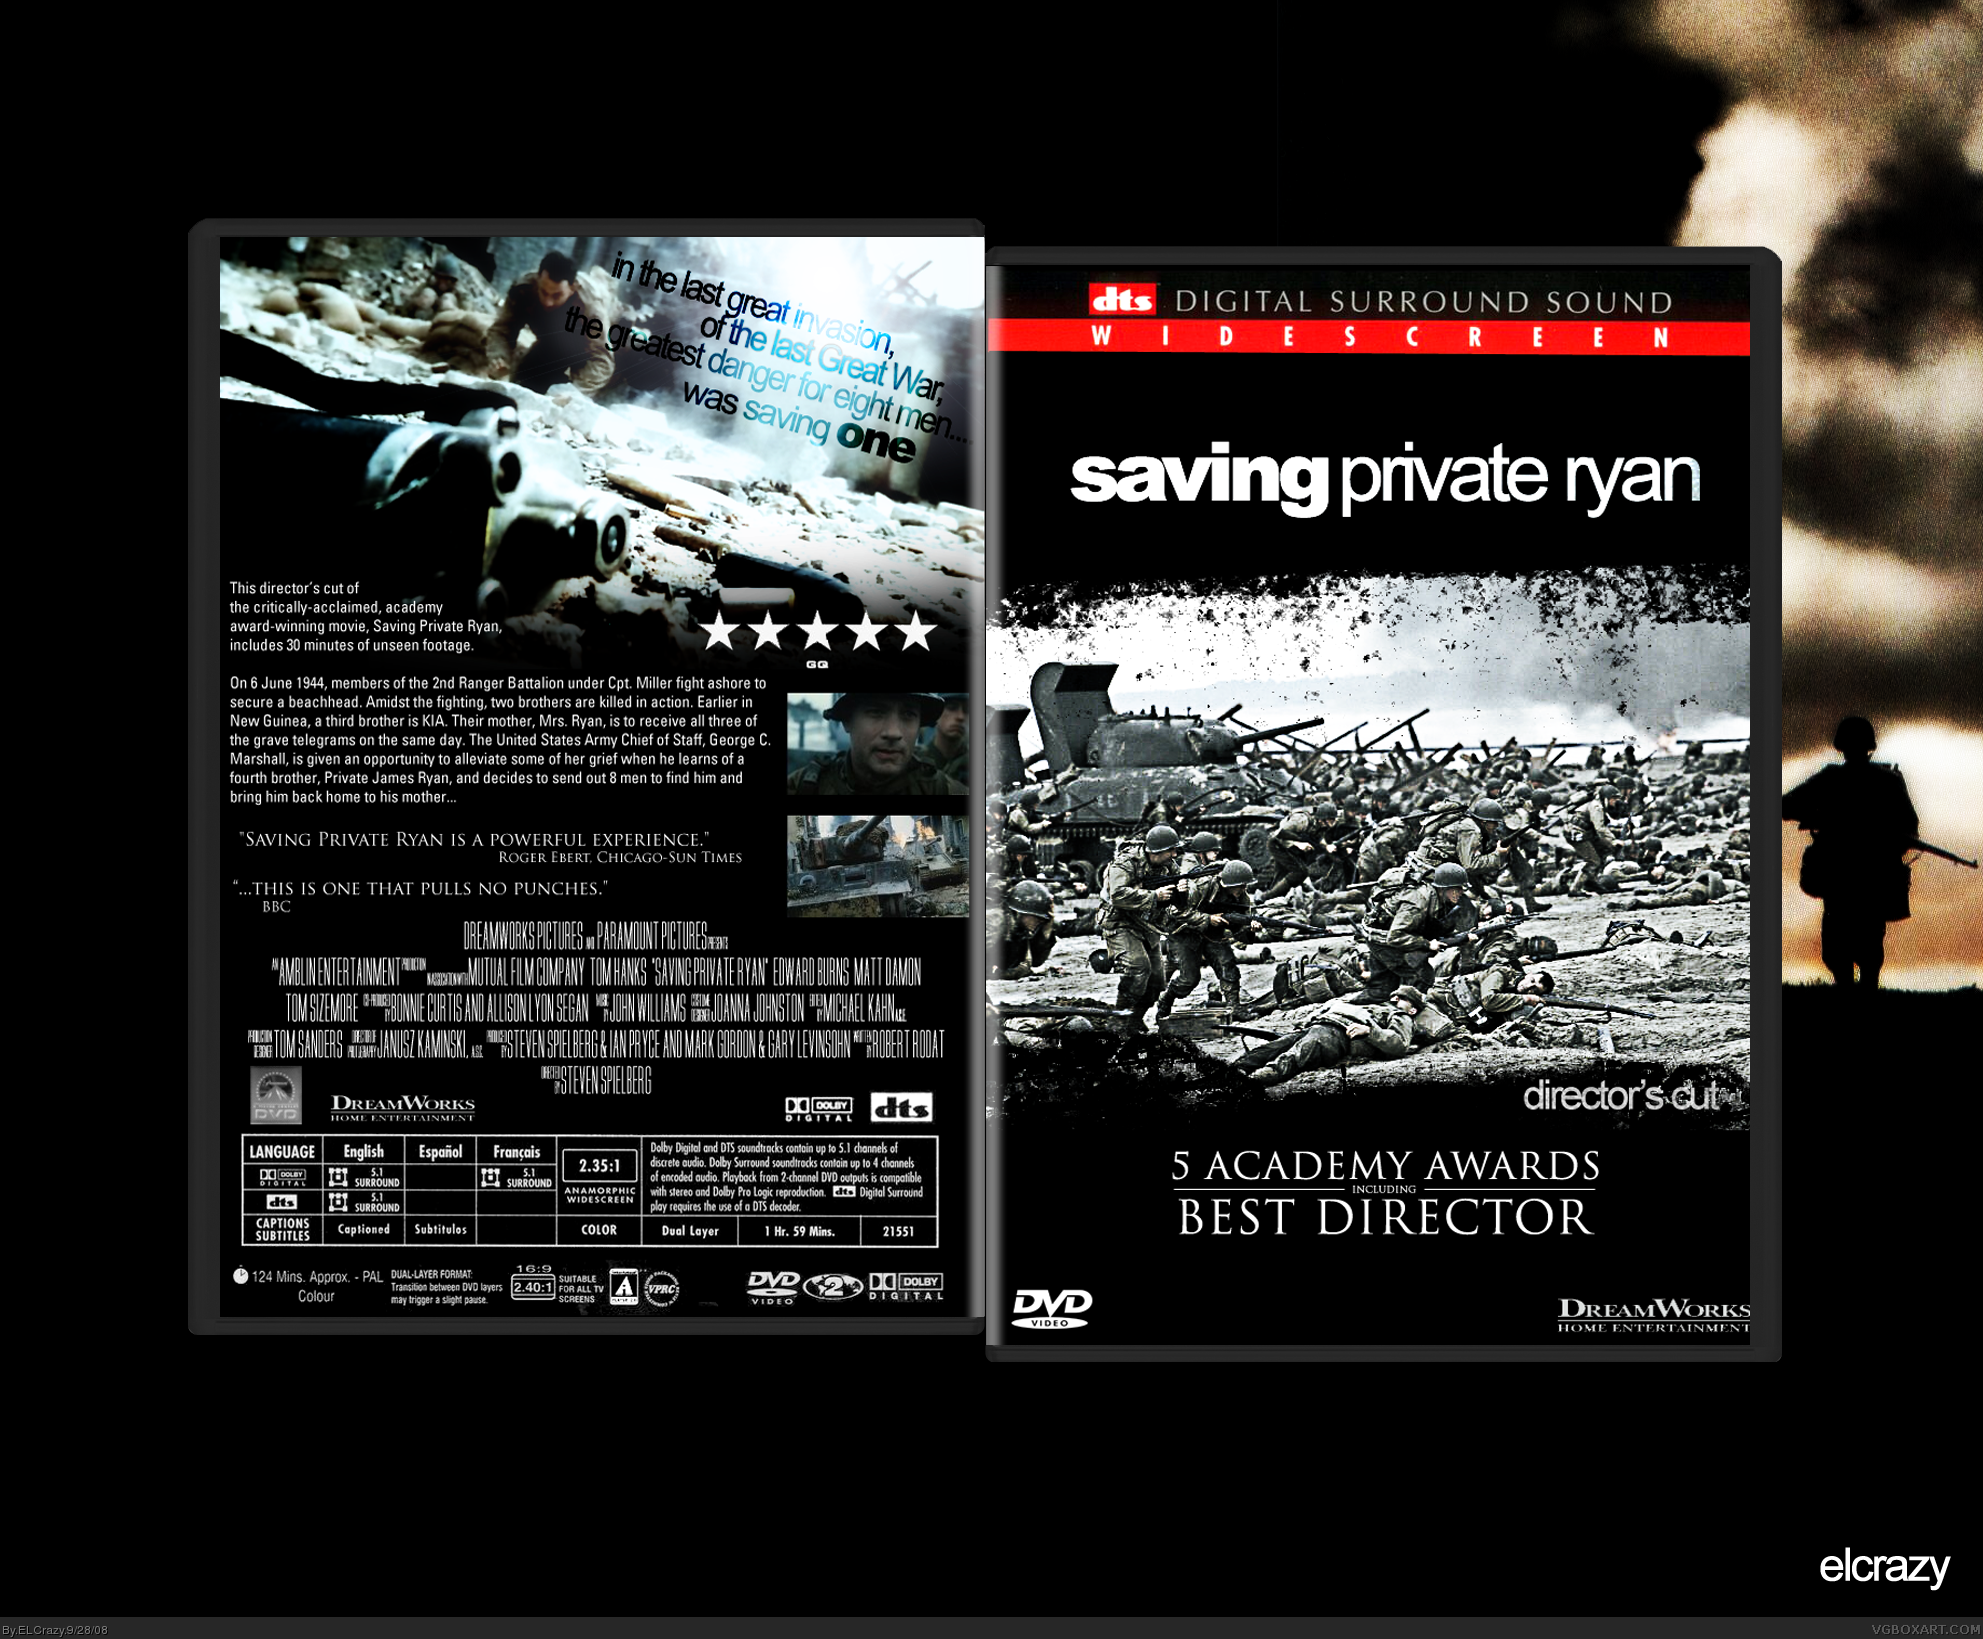 Saving Private Ryan box cover